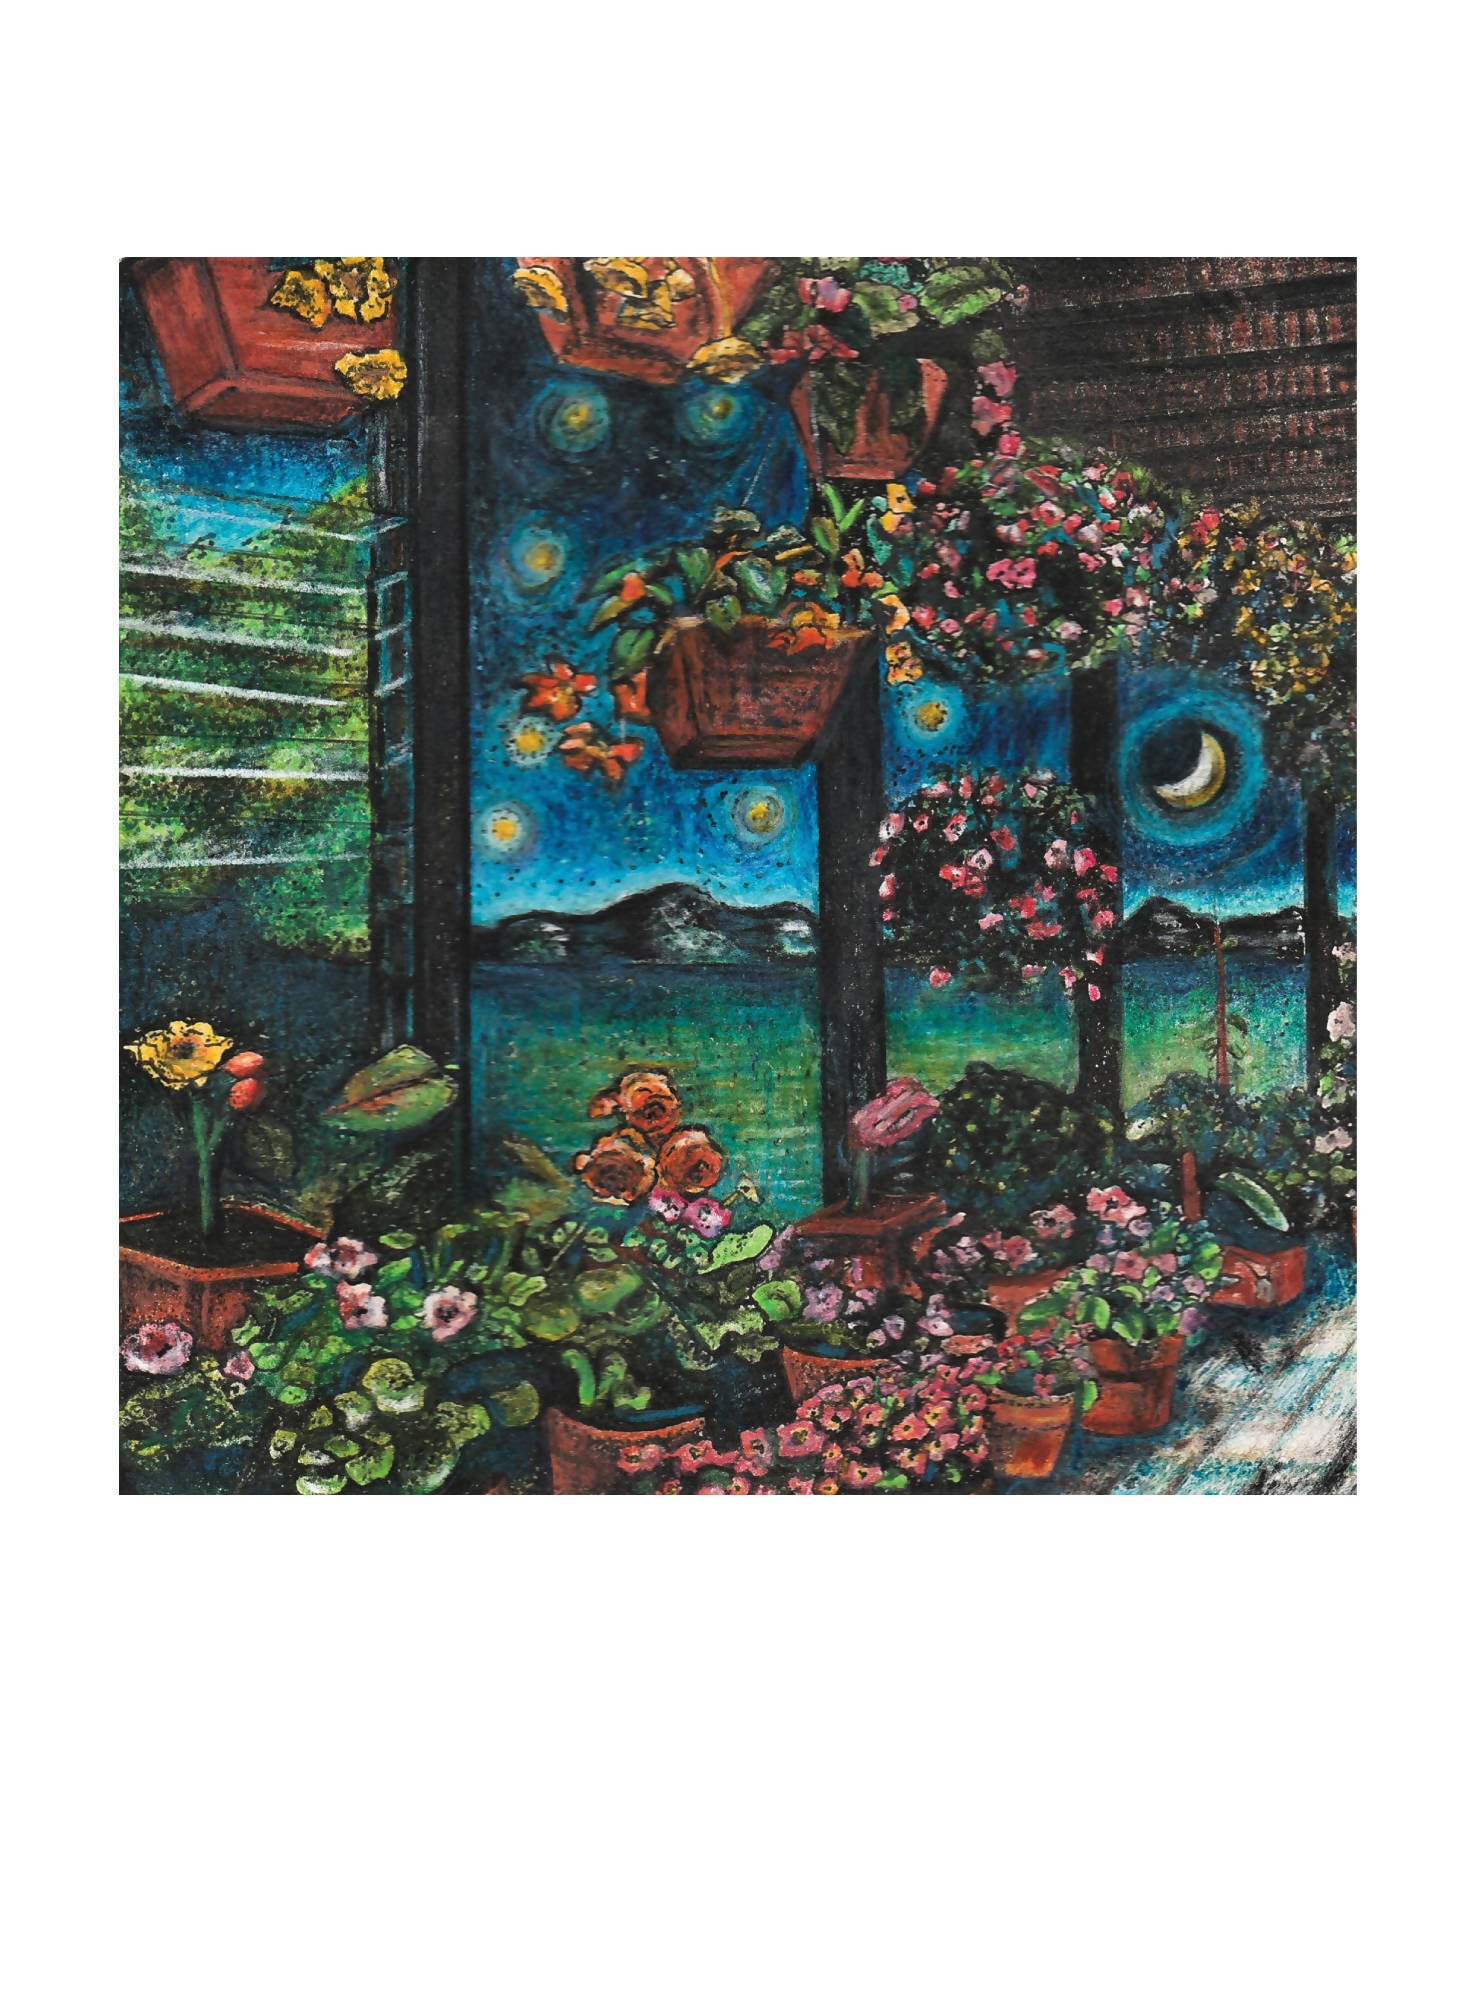 'Night Garden'